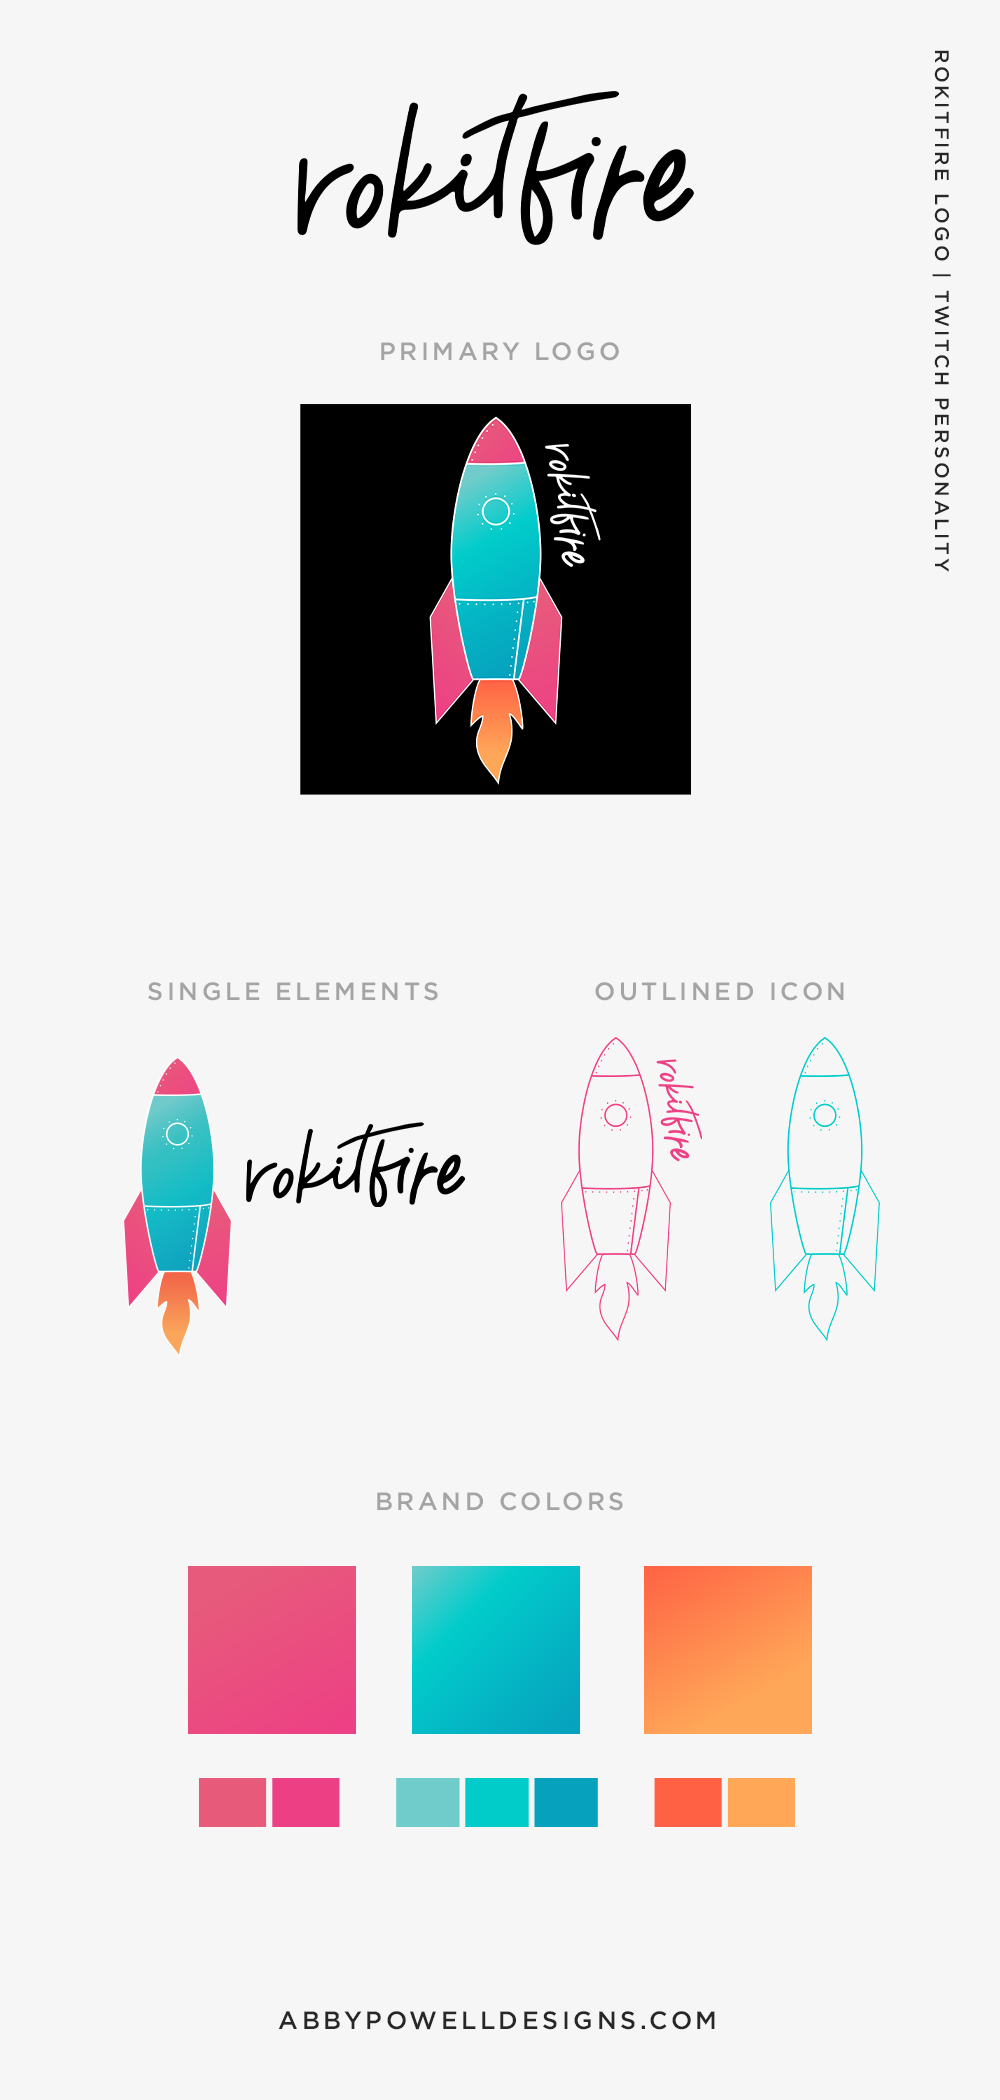 Rokitfire custom logo and branding project by brand designer Abby Powell.